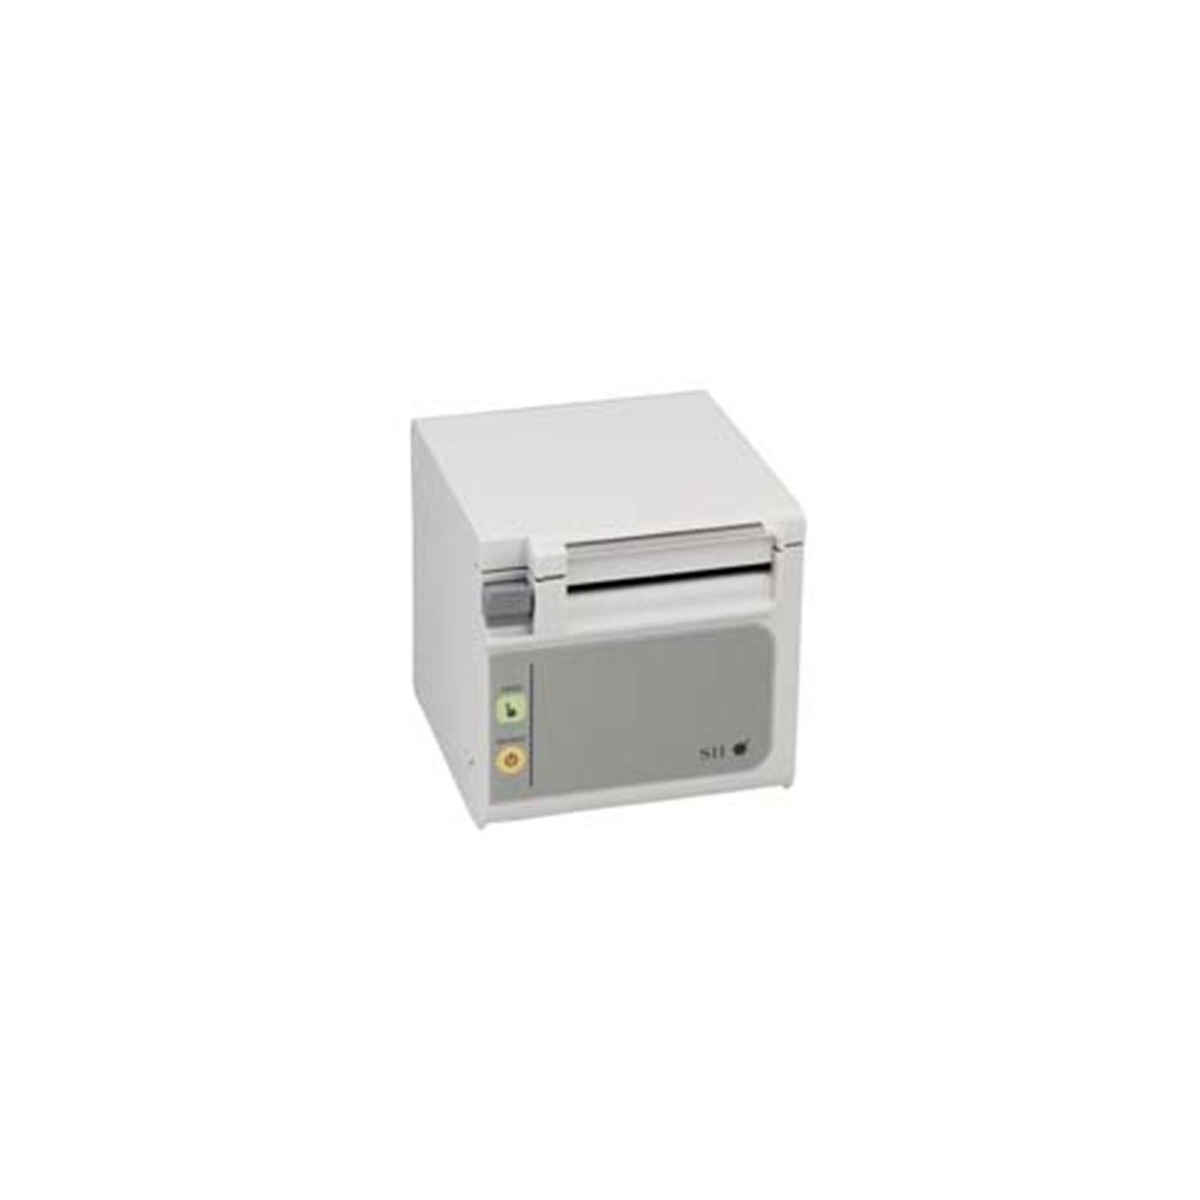 Seiko Instruments RP-E11-W3FJ1-U-C5 - Thermal - POS printer - 203 x 203 DPI - 350 mm/sec - CODABAR (NW-7),Code 128 (A/B/C),Code 